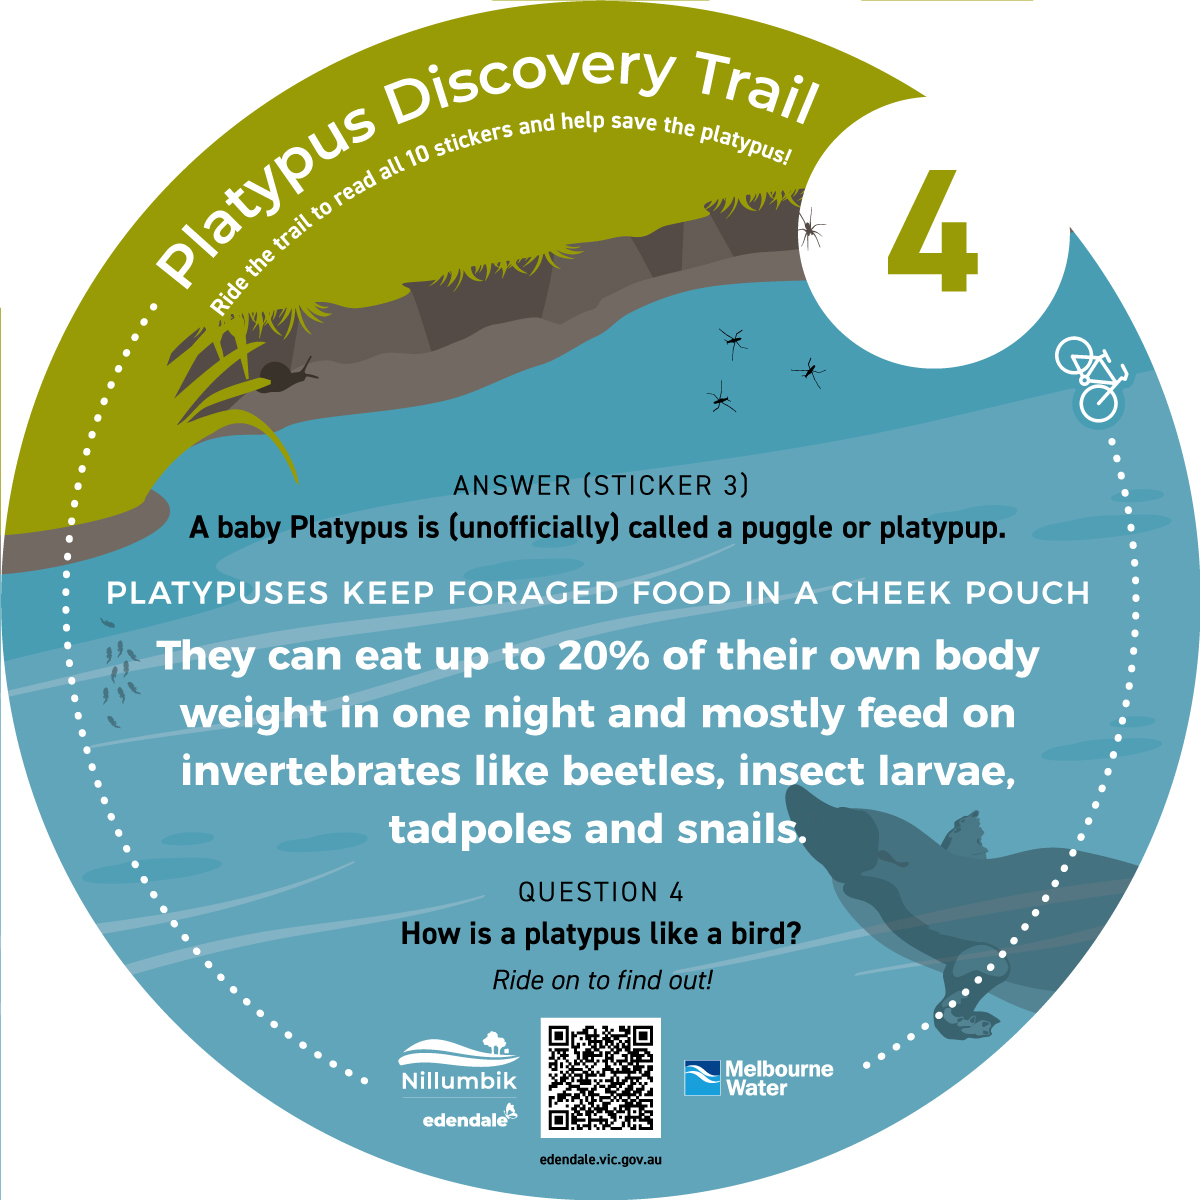 Diamond-Creek-Platypus-Discovery-Trail-4.jpg